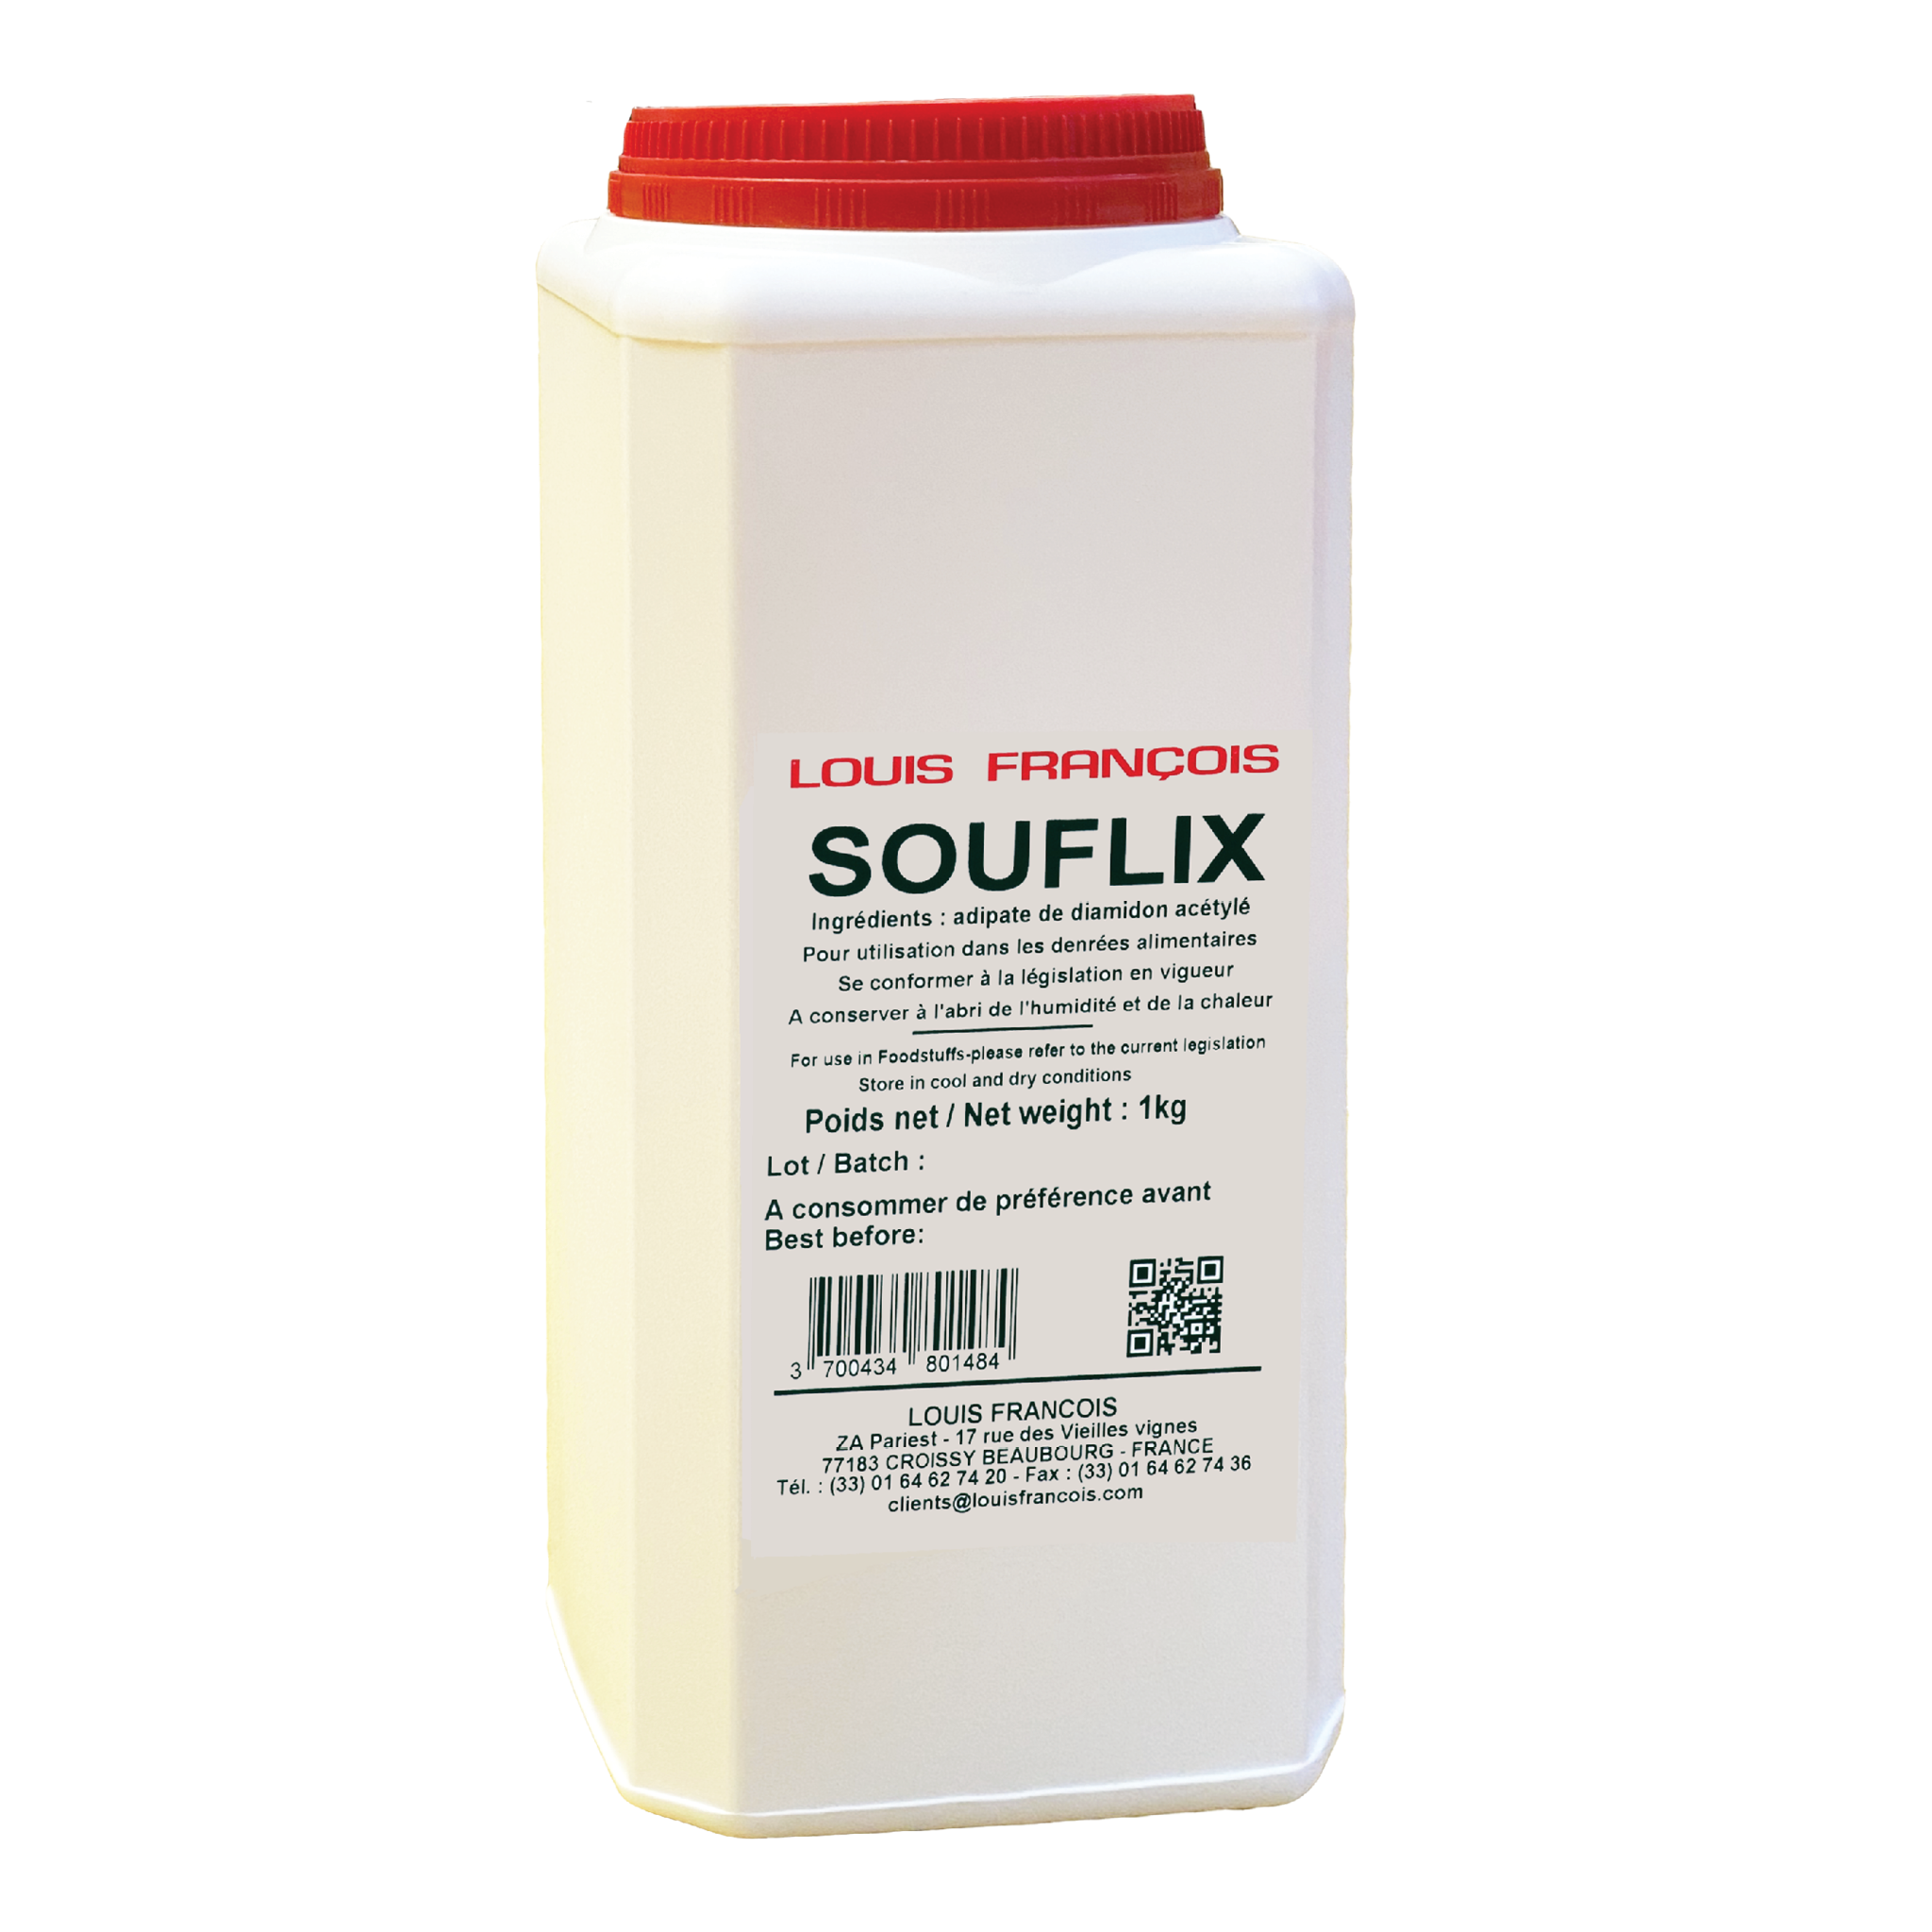 Souflix 2.2 lbs